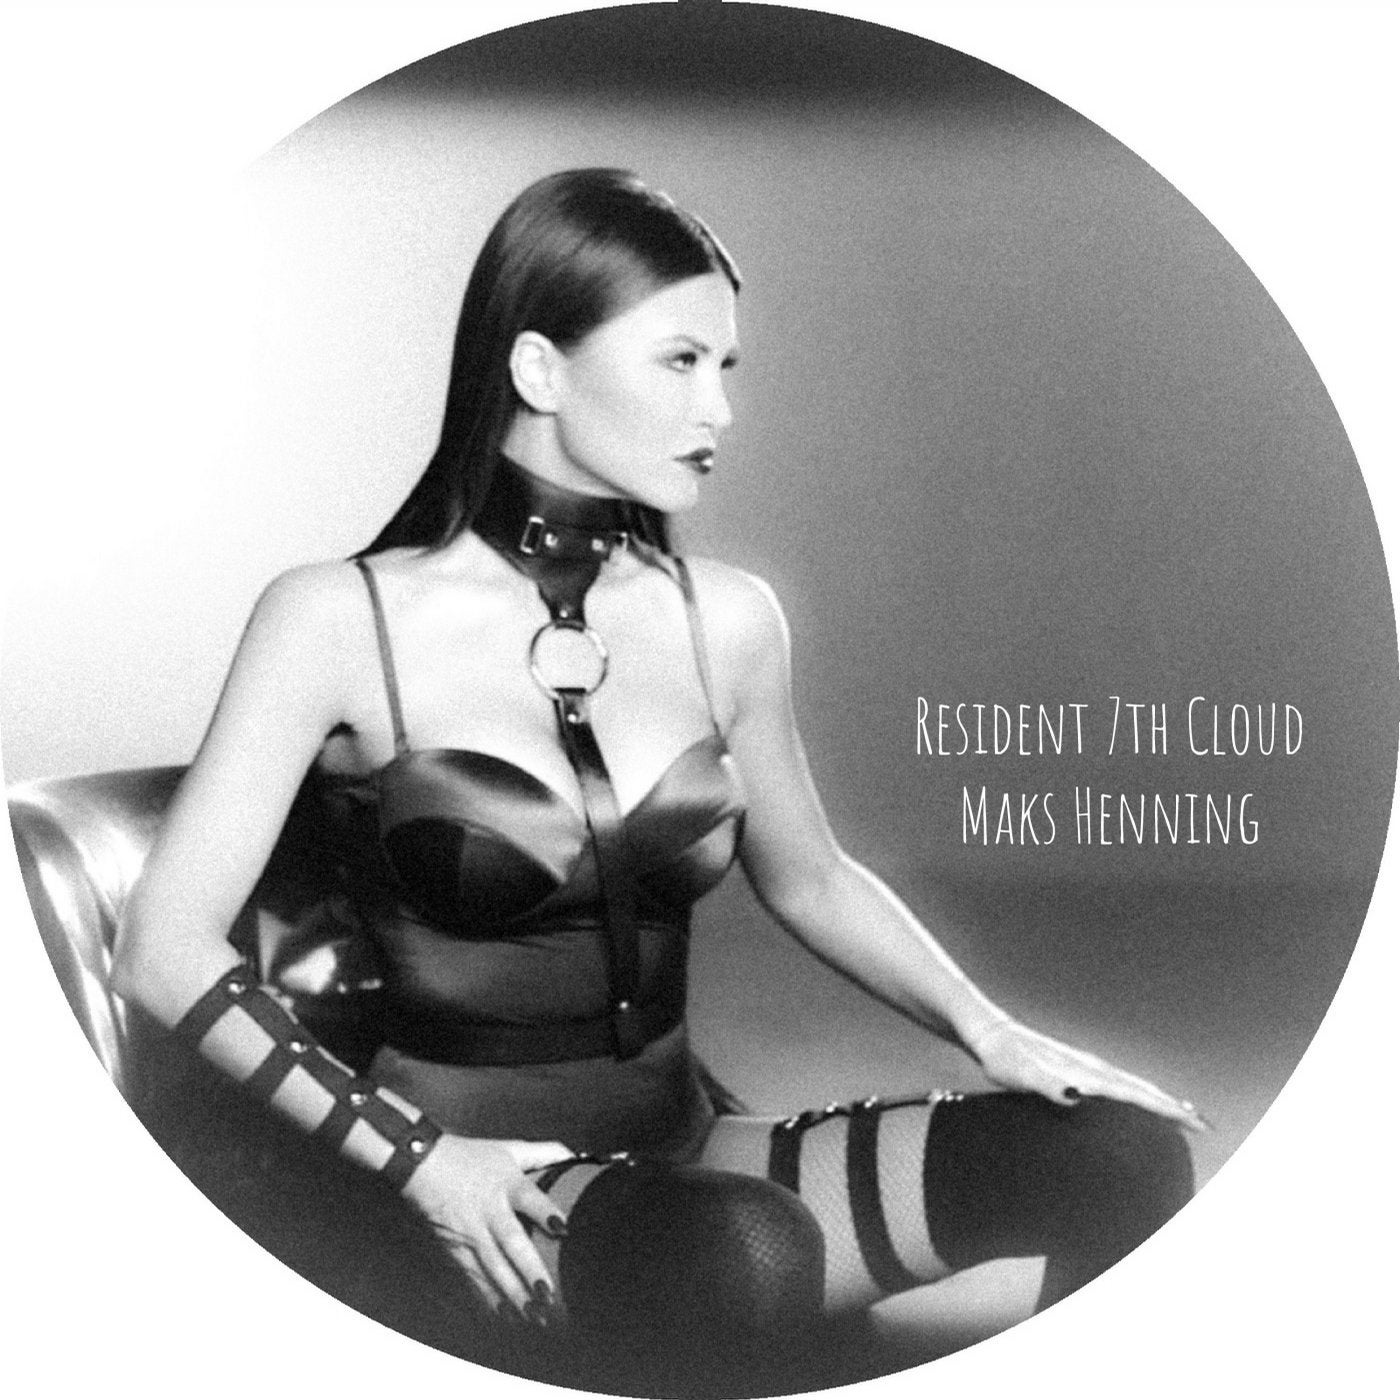 Resident 7th Cloud - Maks Henning